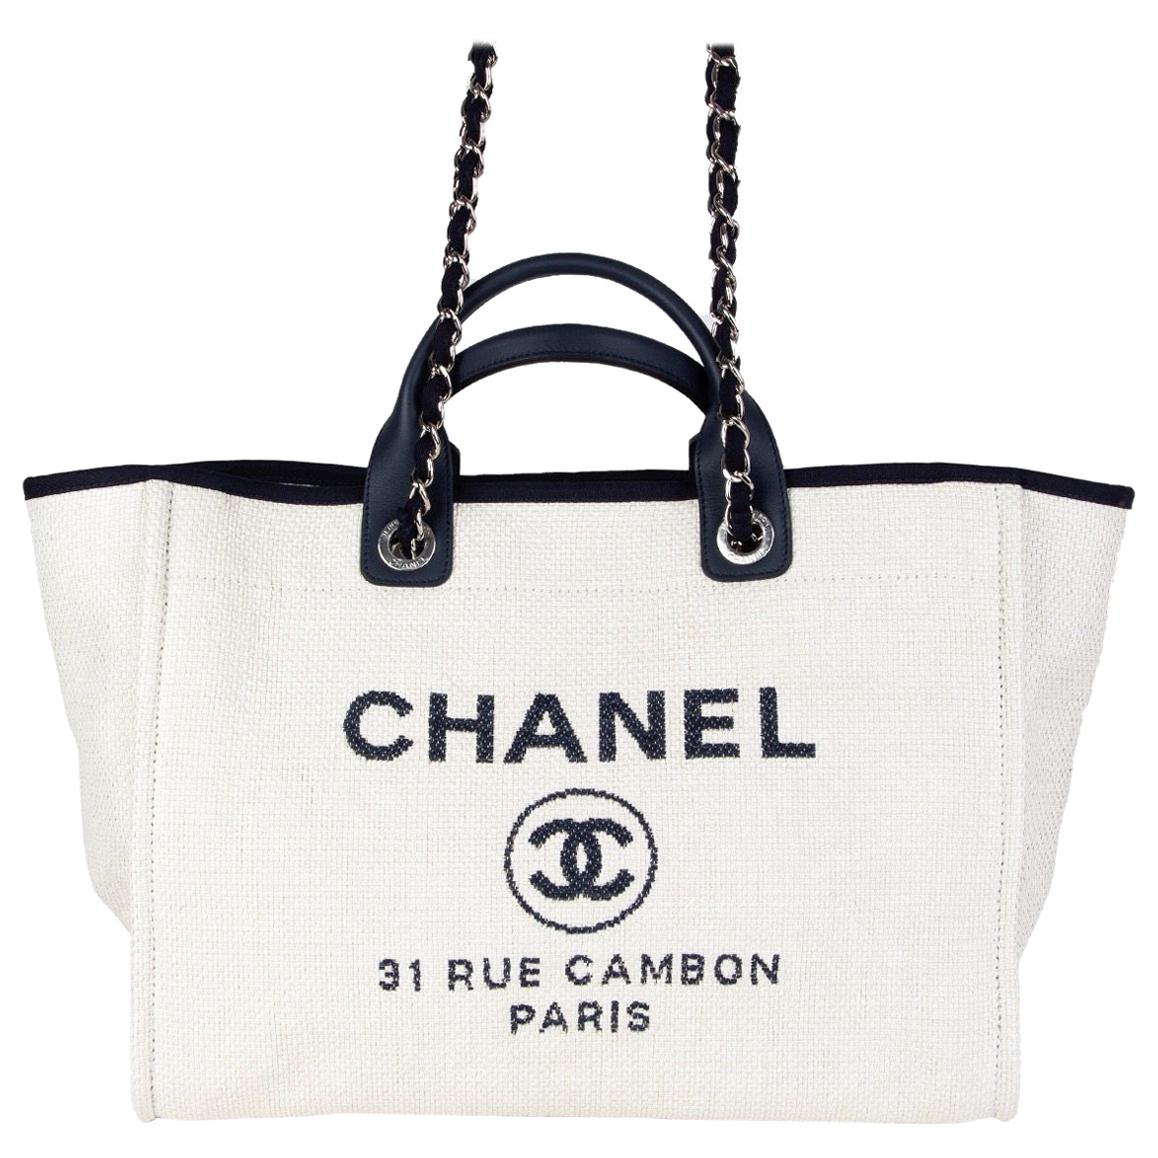 CHANEL white raffia & navy leather DEAUVILLE LARGE Shopper Shoulder Bag